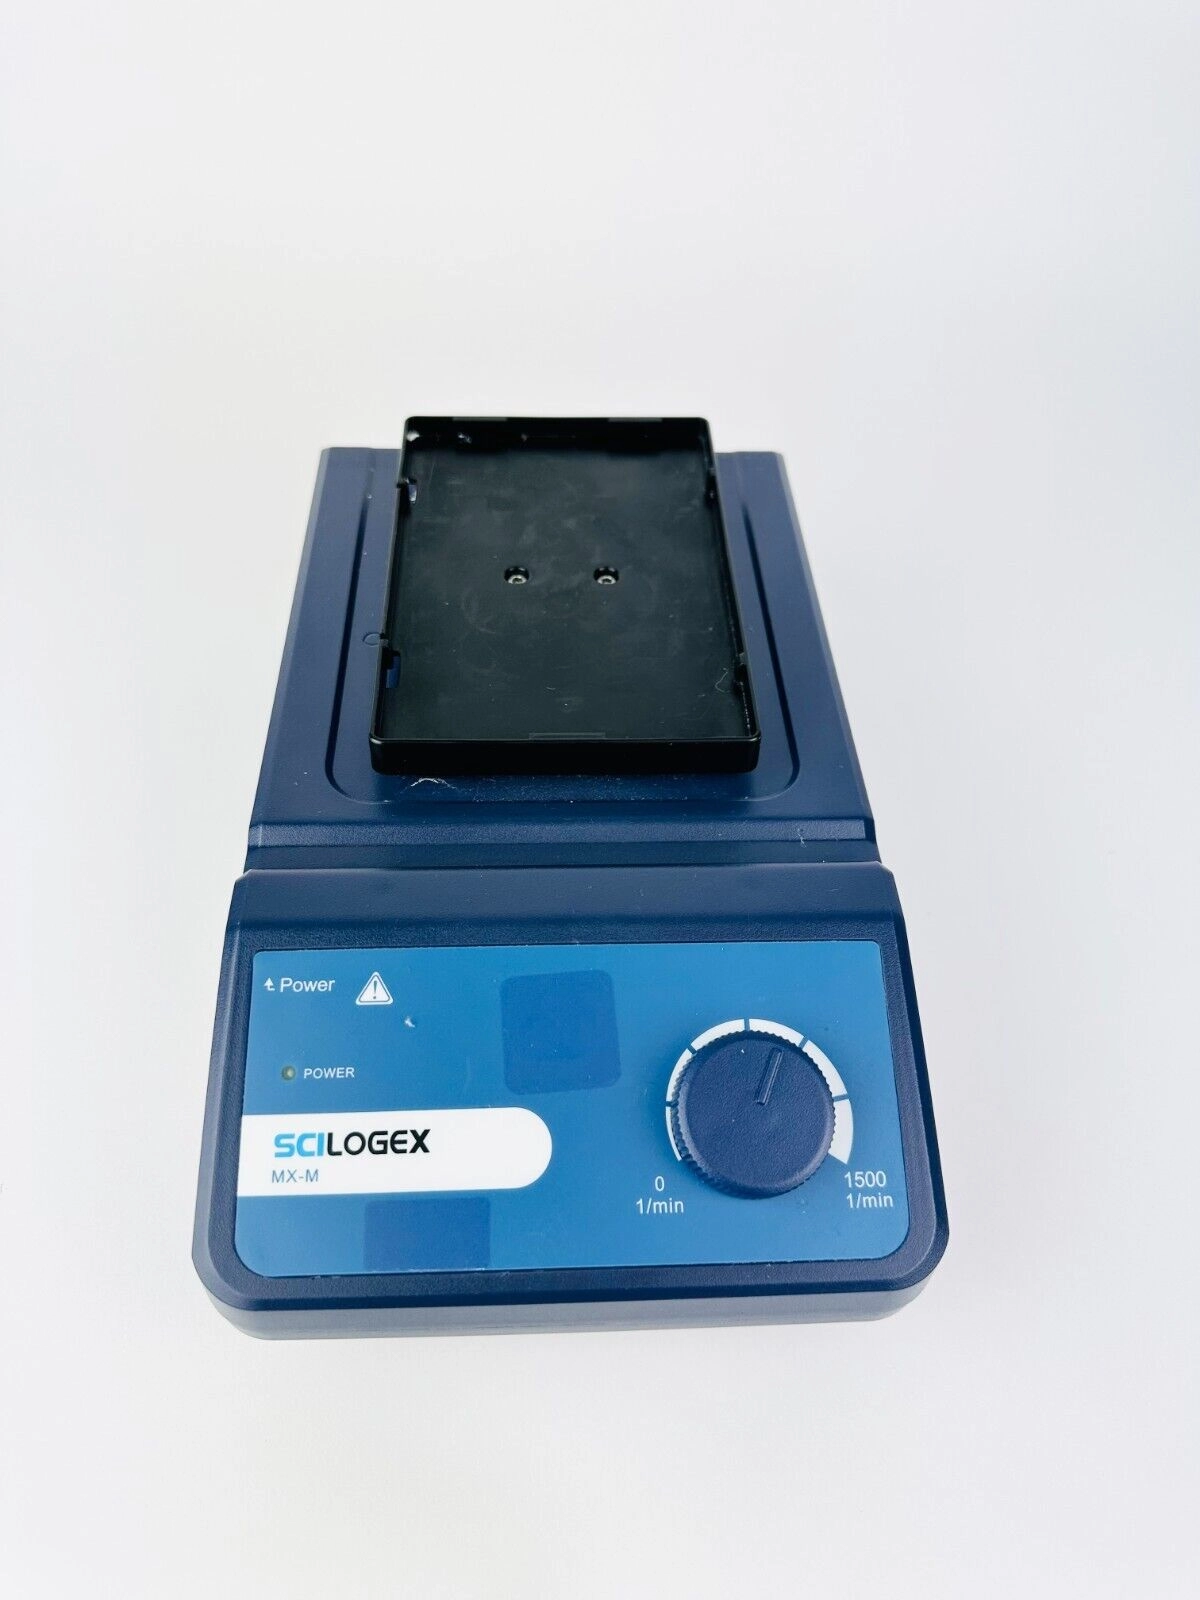 Scilogex Analog MX-M Microplate Mixer